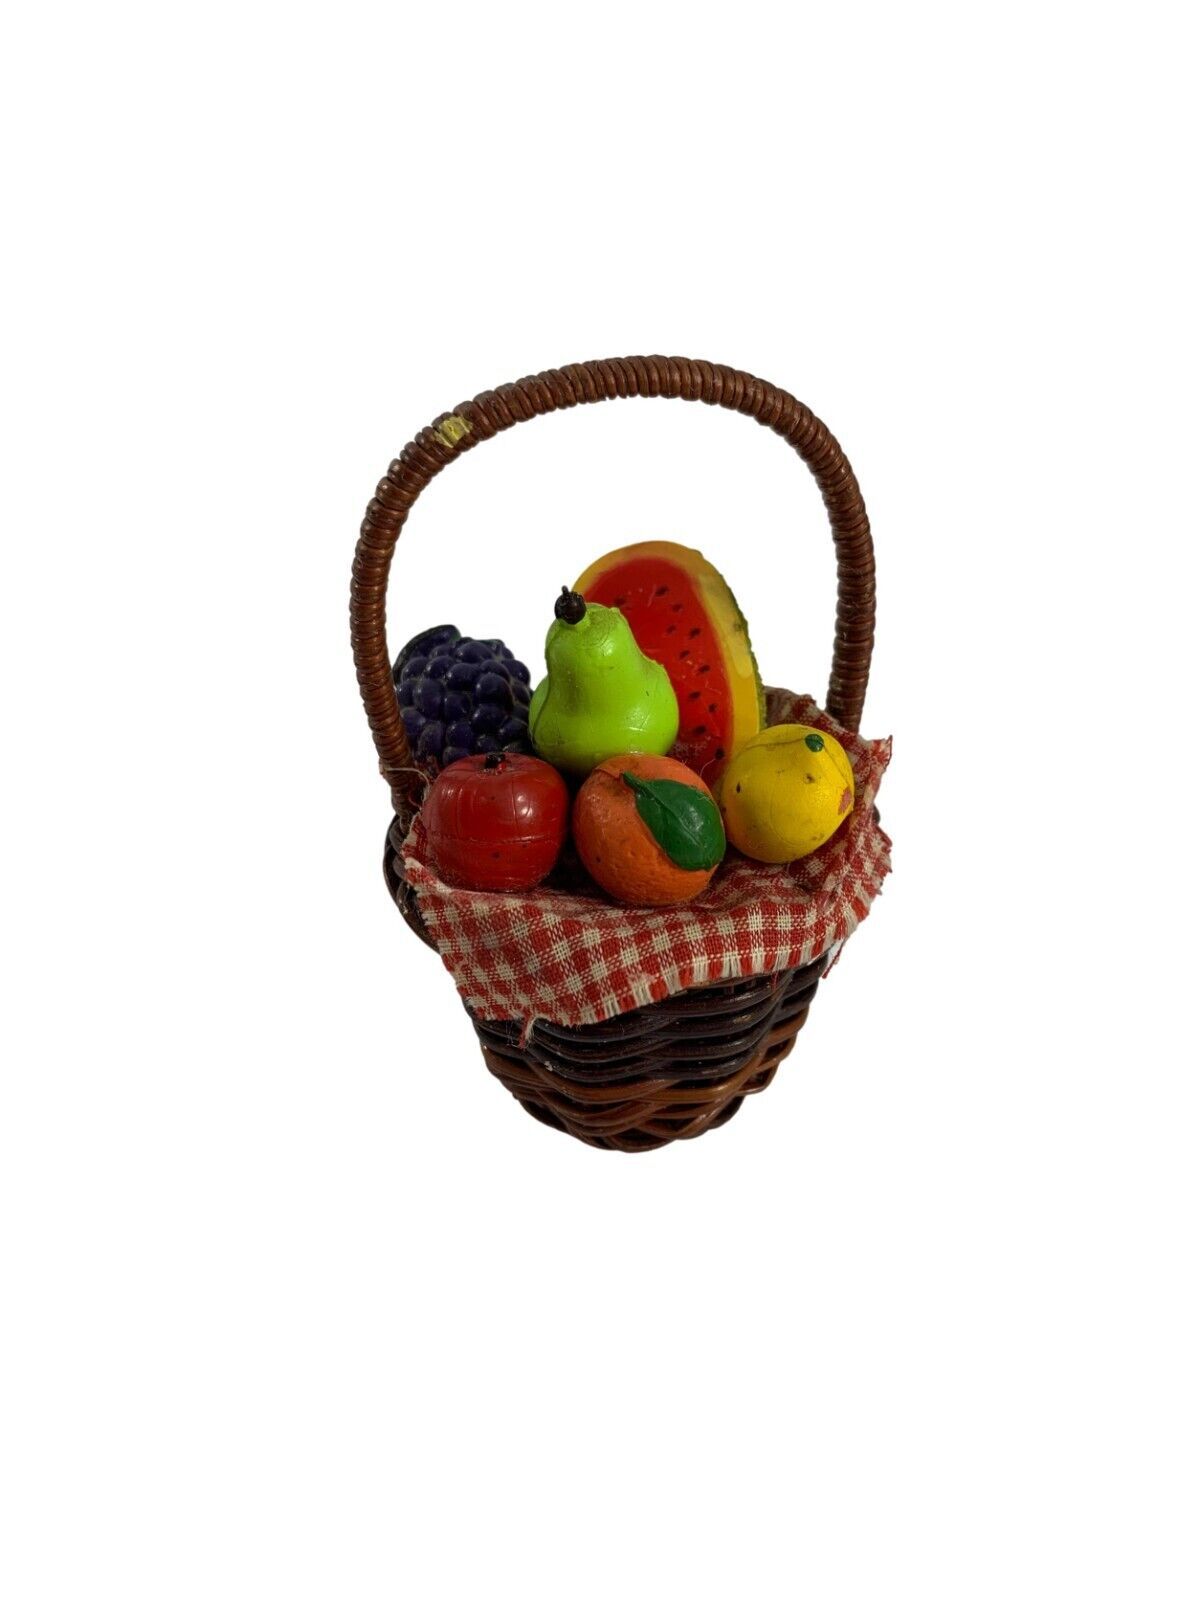 Vintage Wicker Fruit Basket Refrigerator Fridge Magnet 3D Miniature Watermelon - $14.85